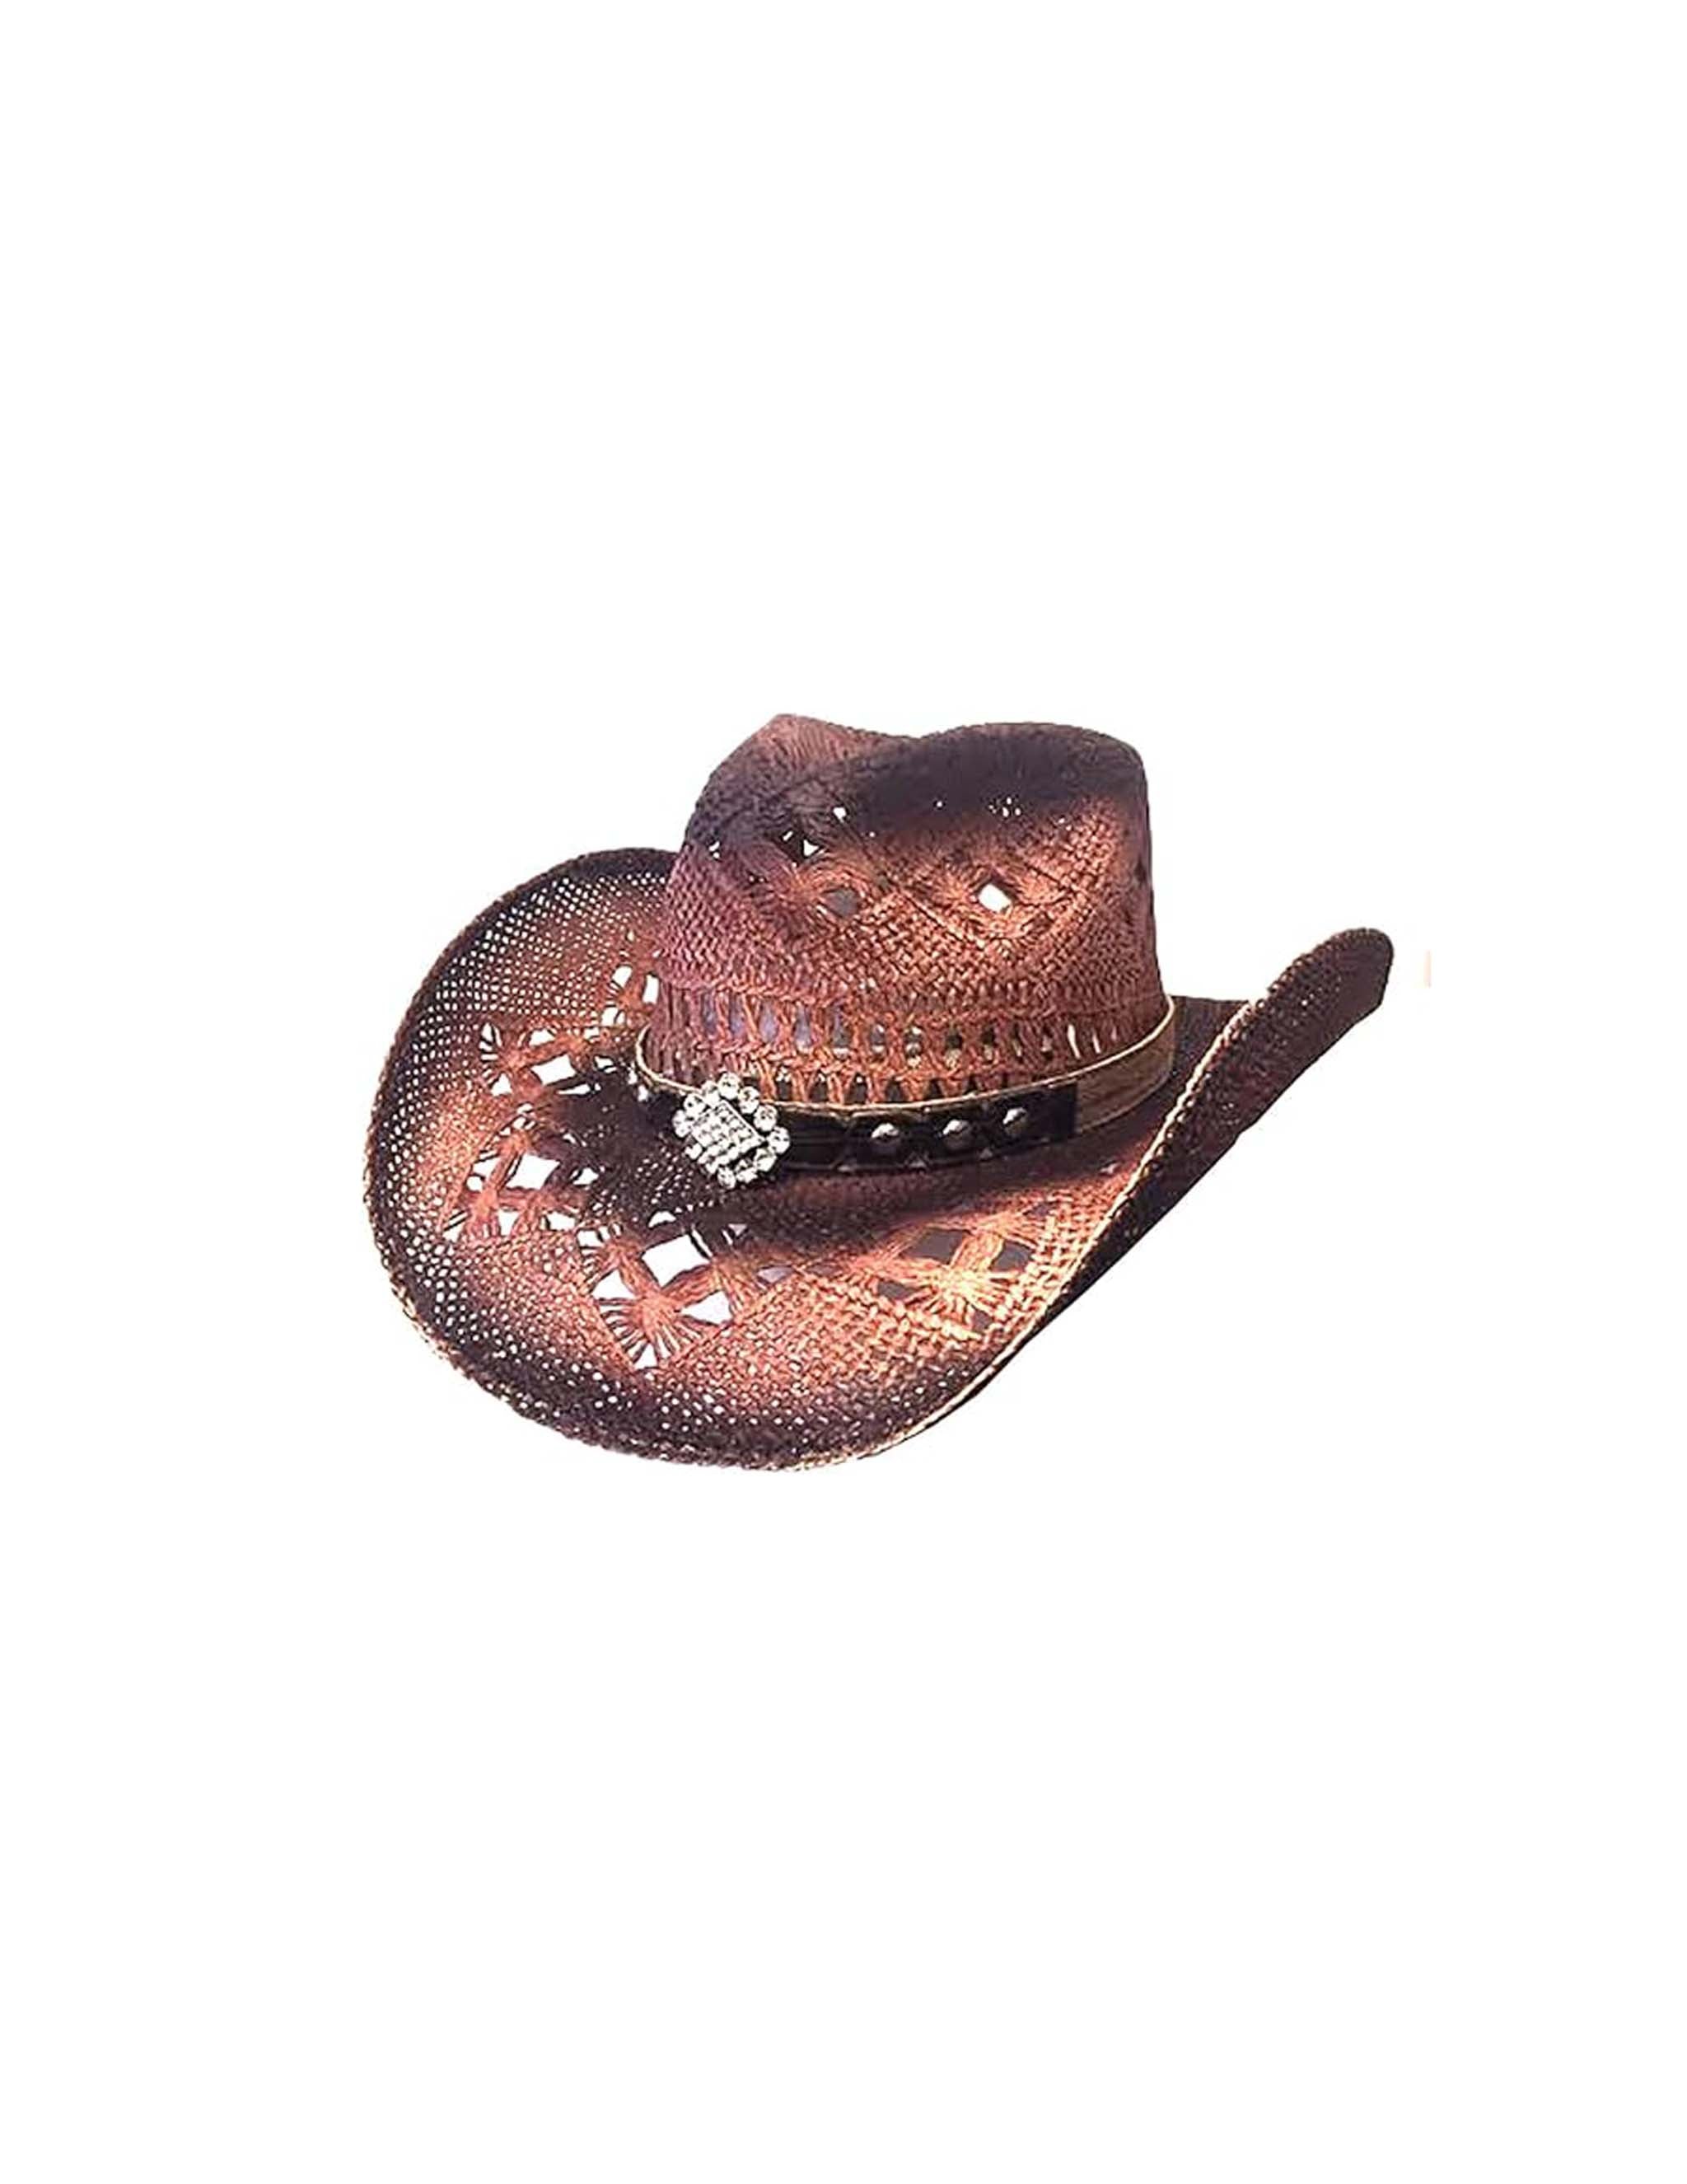 Magnificent Rhinestone Cowboy Hat